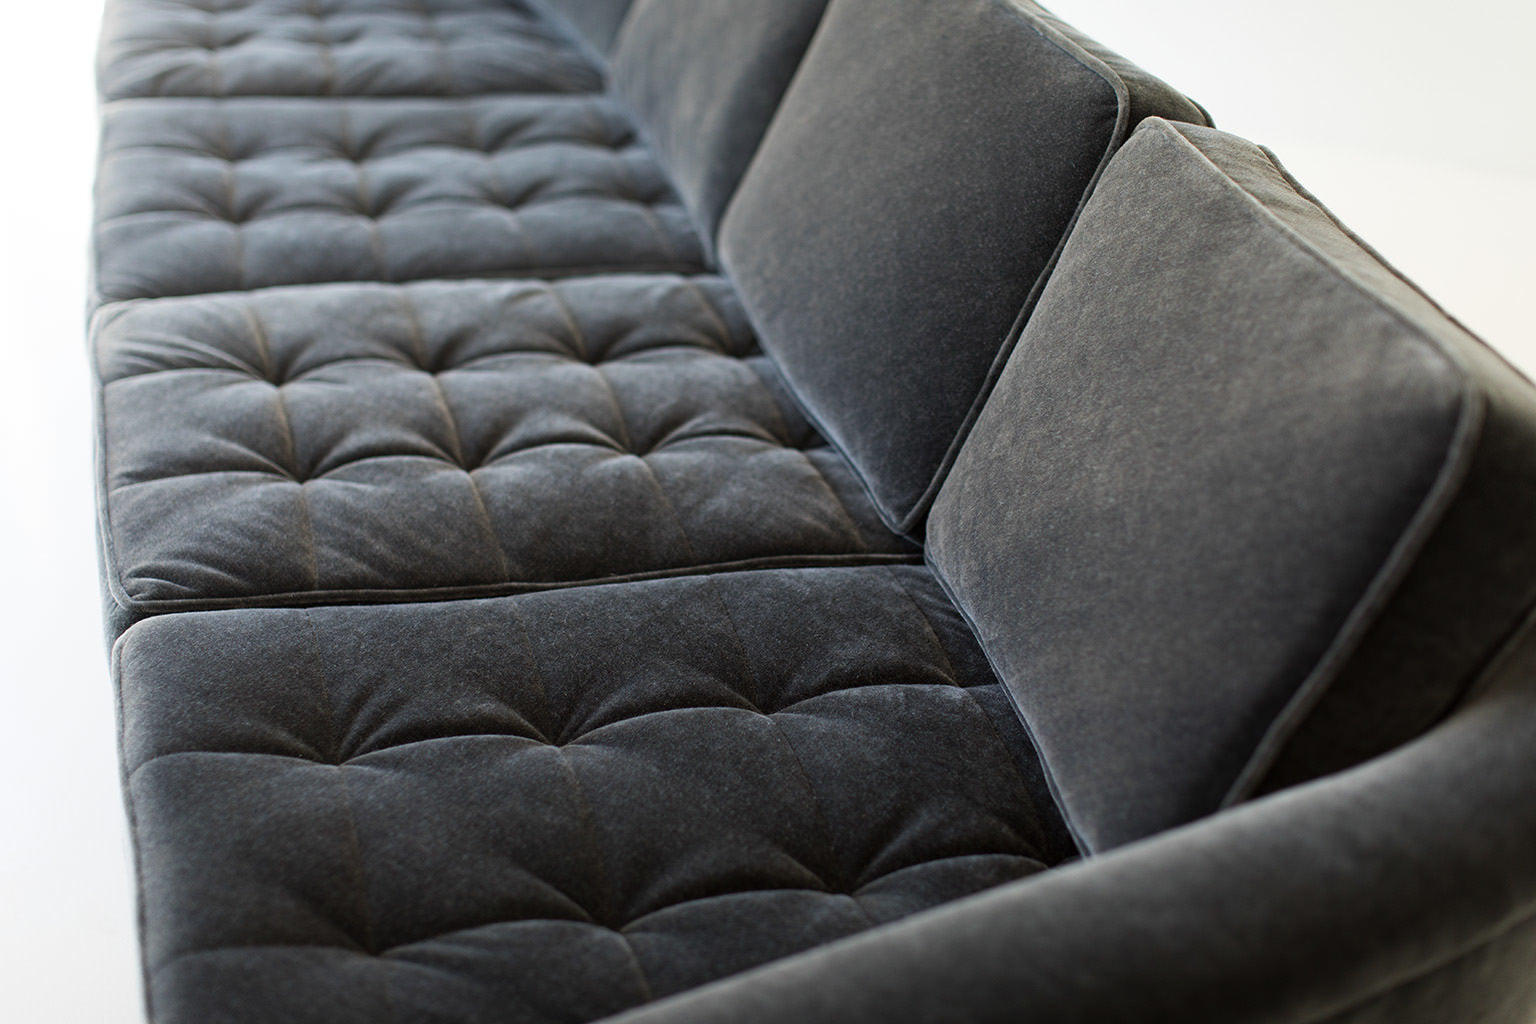 Harvey Probber Mohair Sofa for Harvey Probber Design Inc. - 05101801